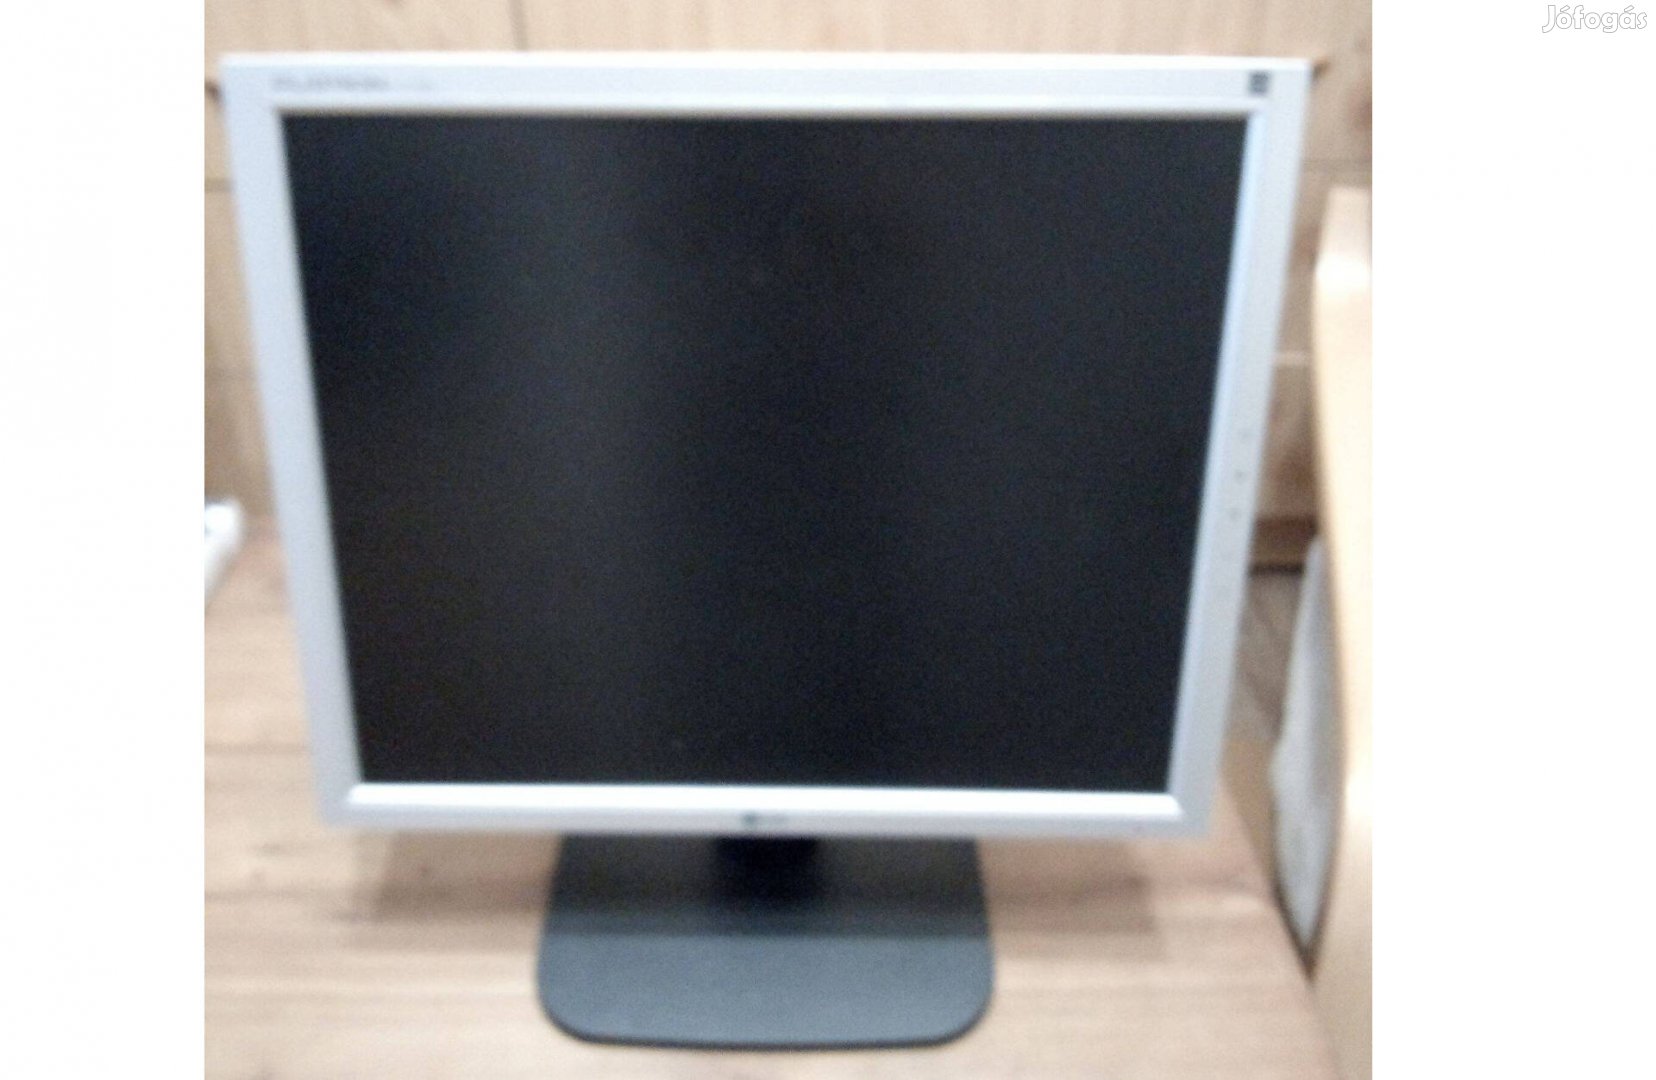 LG Flattron L1718S-SN LCD monitor 17", jó állapot 3100 Ft Bp. 3